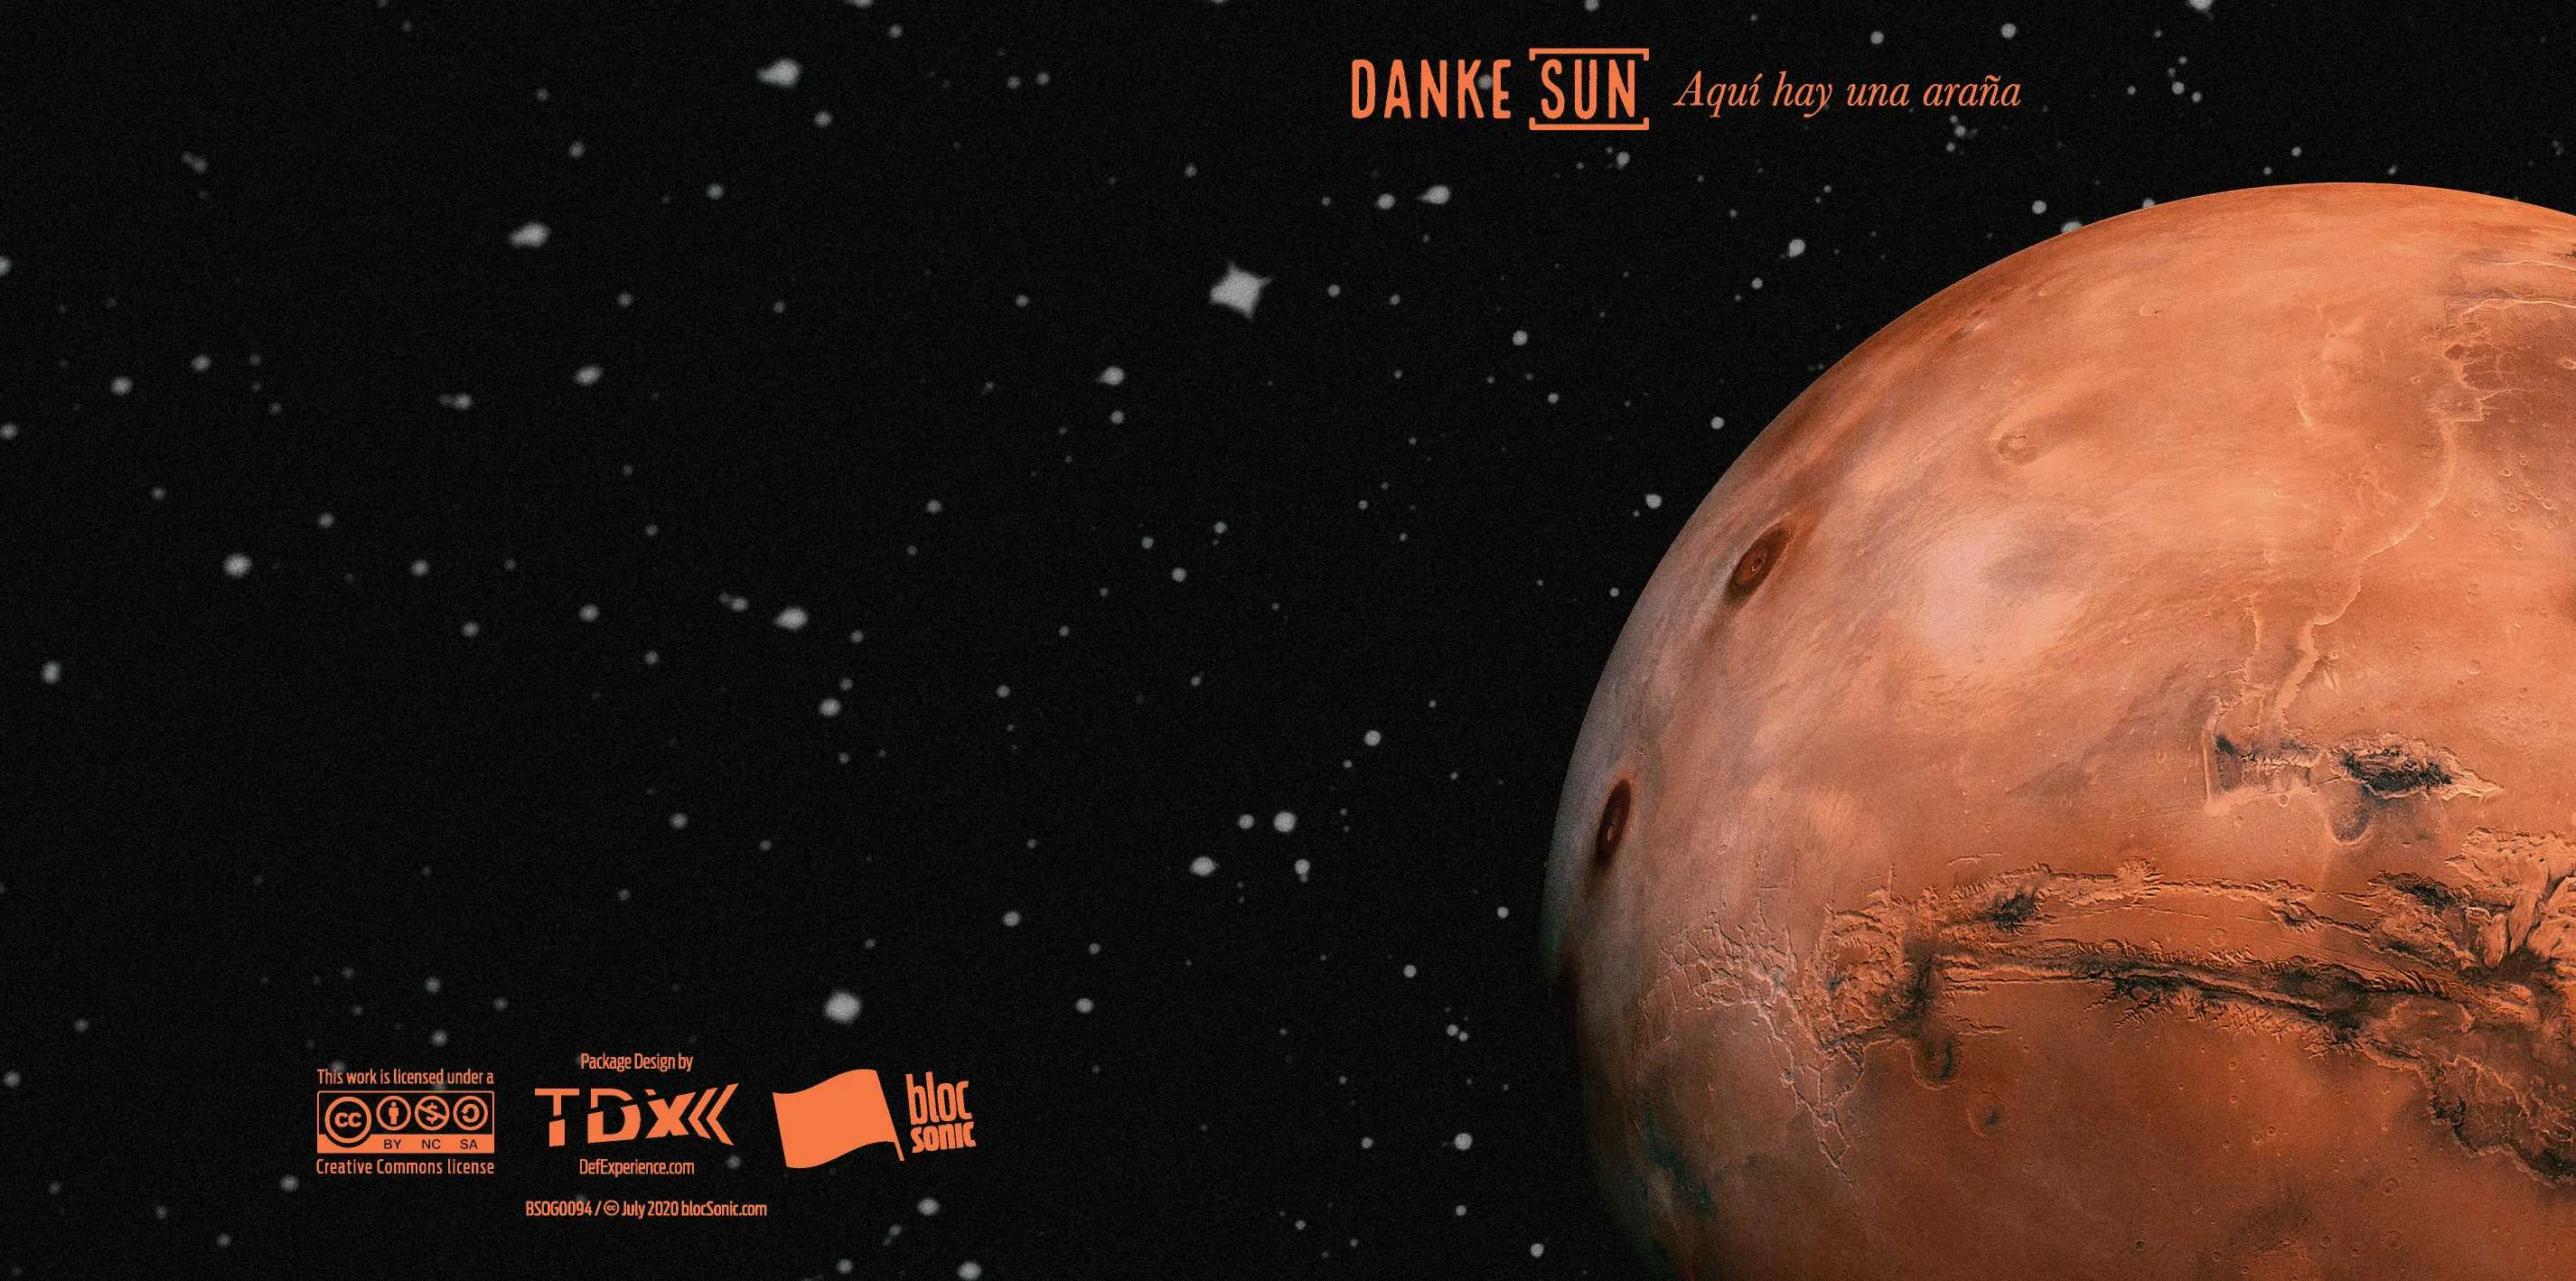 Album insert for “Aquí hay una araña” by Danke Sun